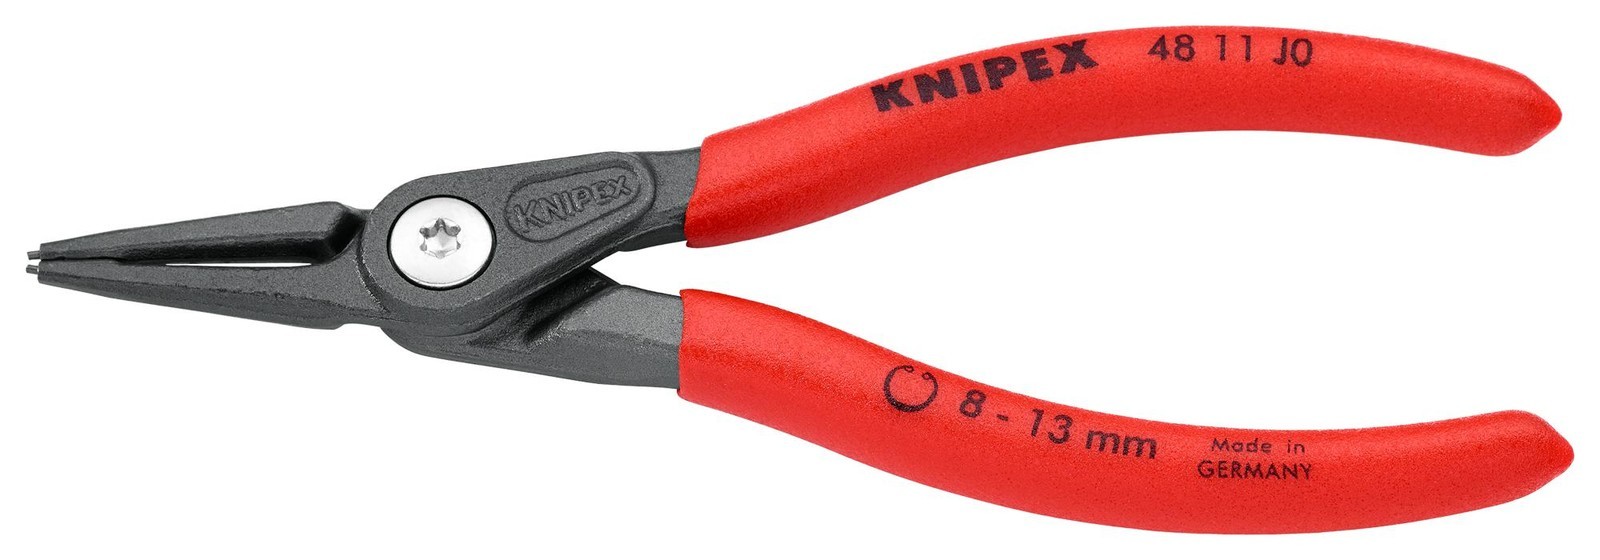 Knipex 48 11 J0 Circlip Plier, Int, Straight